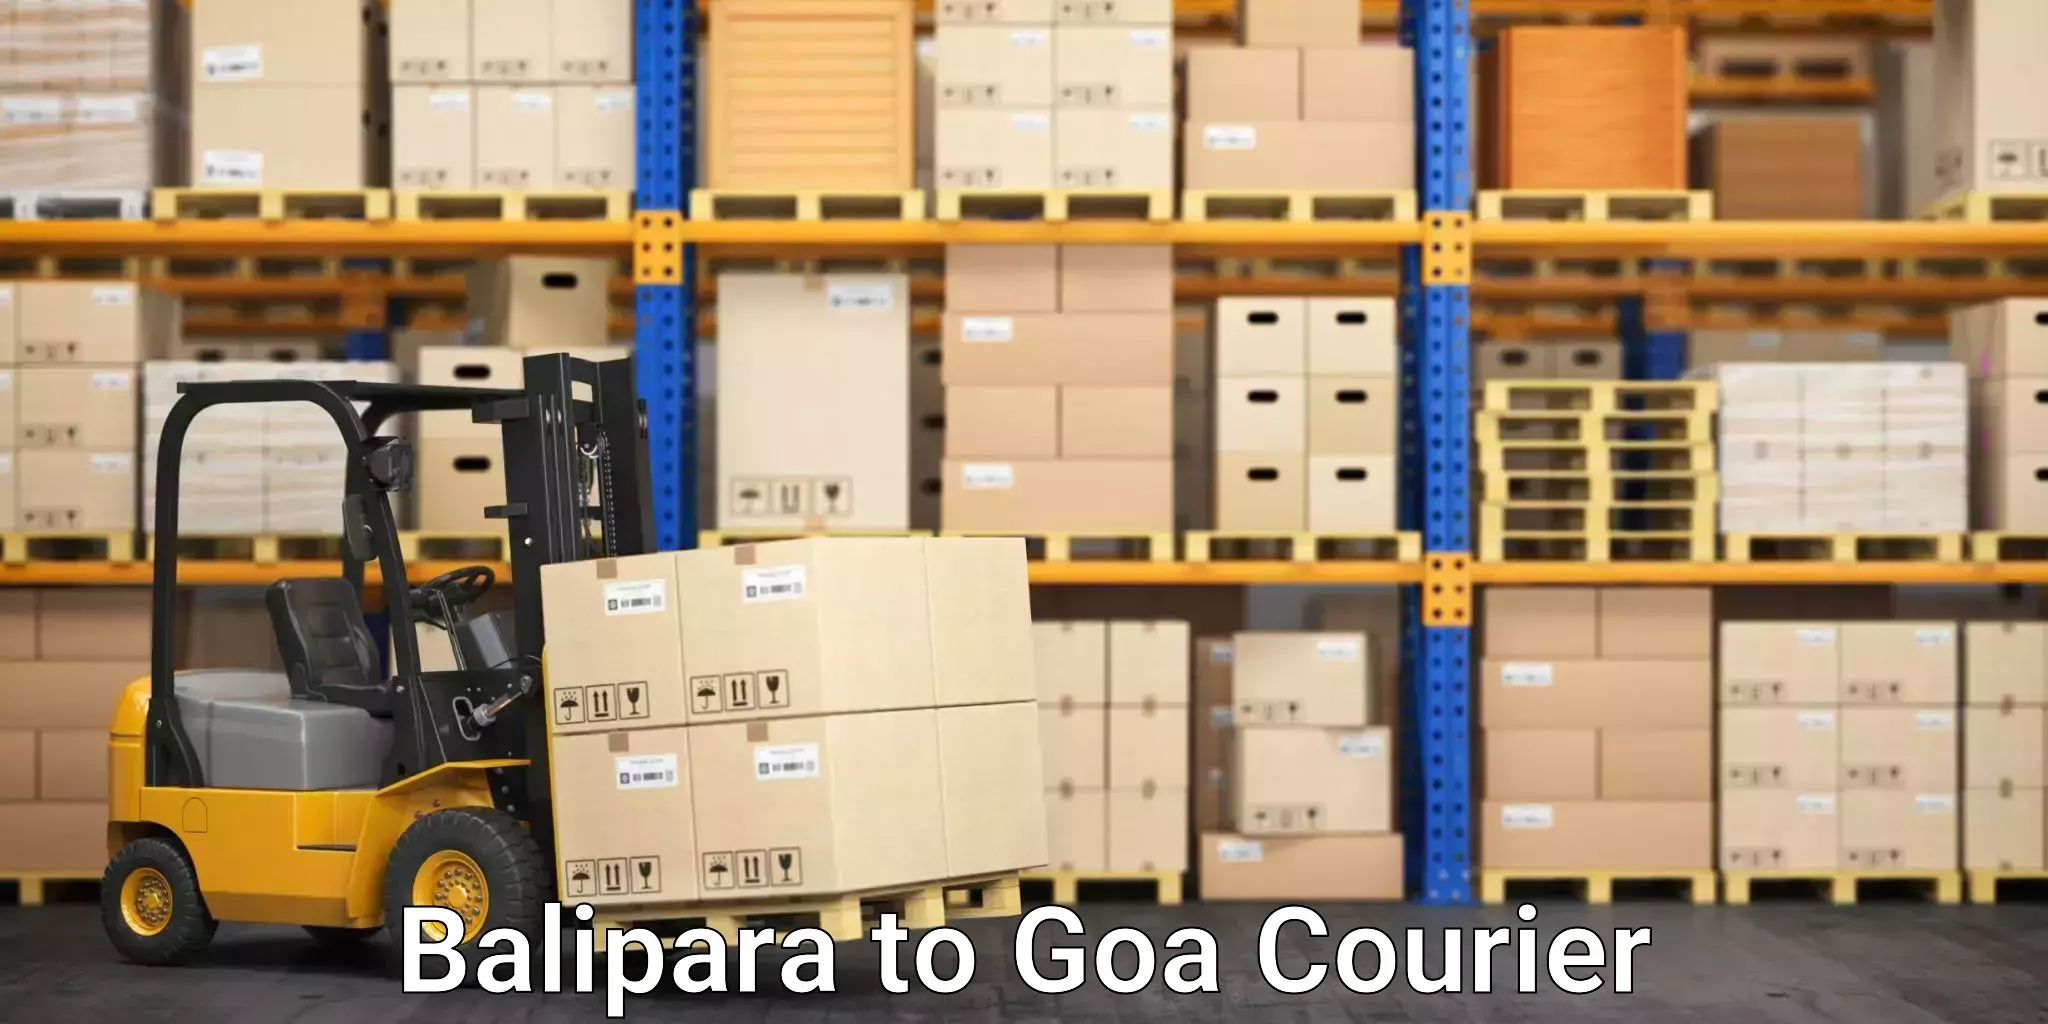 On-call courier service Balipara to Goa